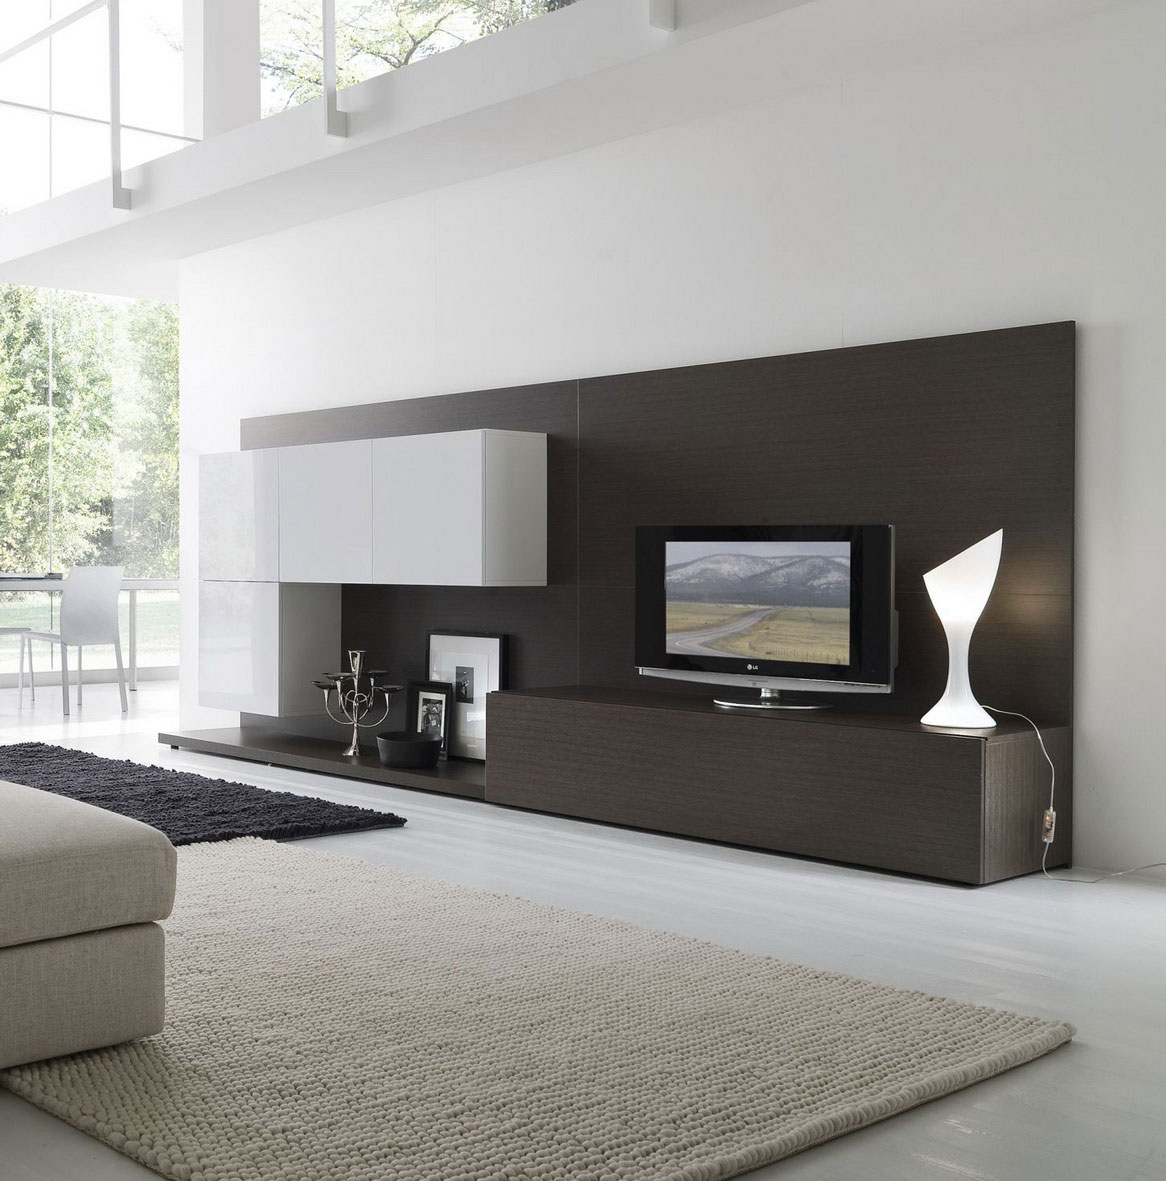 Famous Modern Living Room Interior Design 1166 x 1181 195 kB